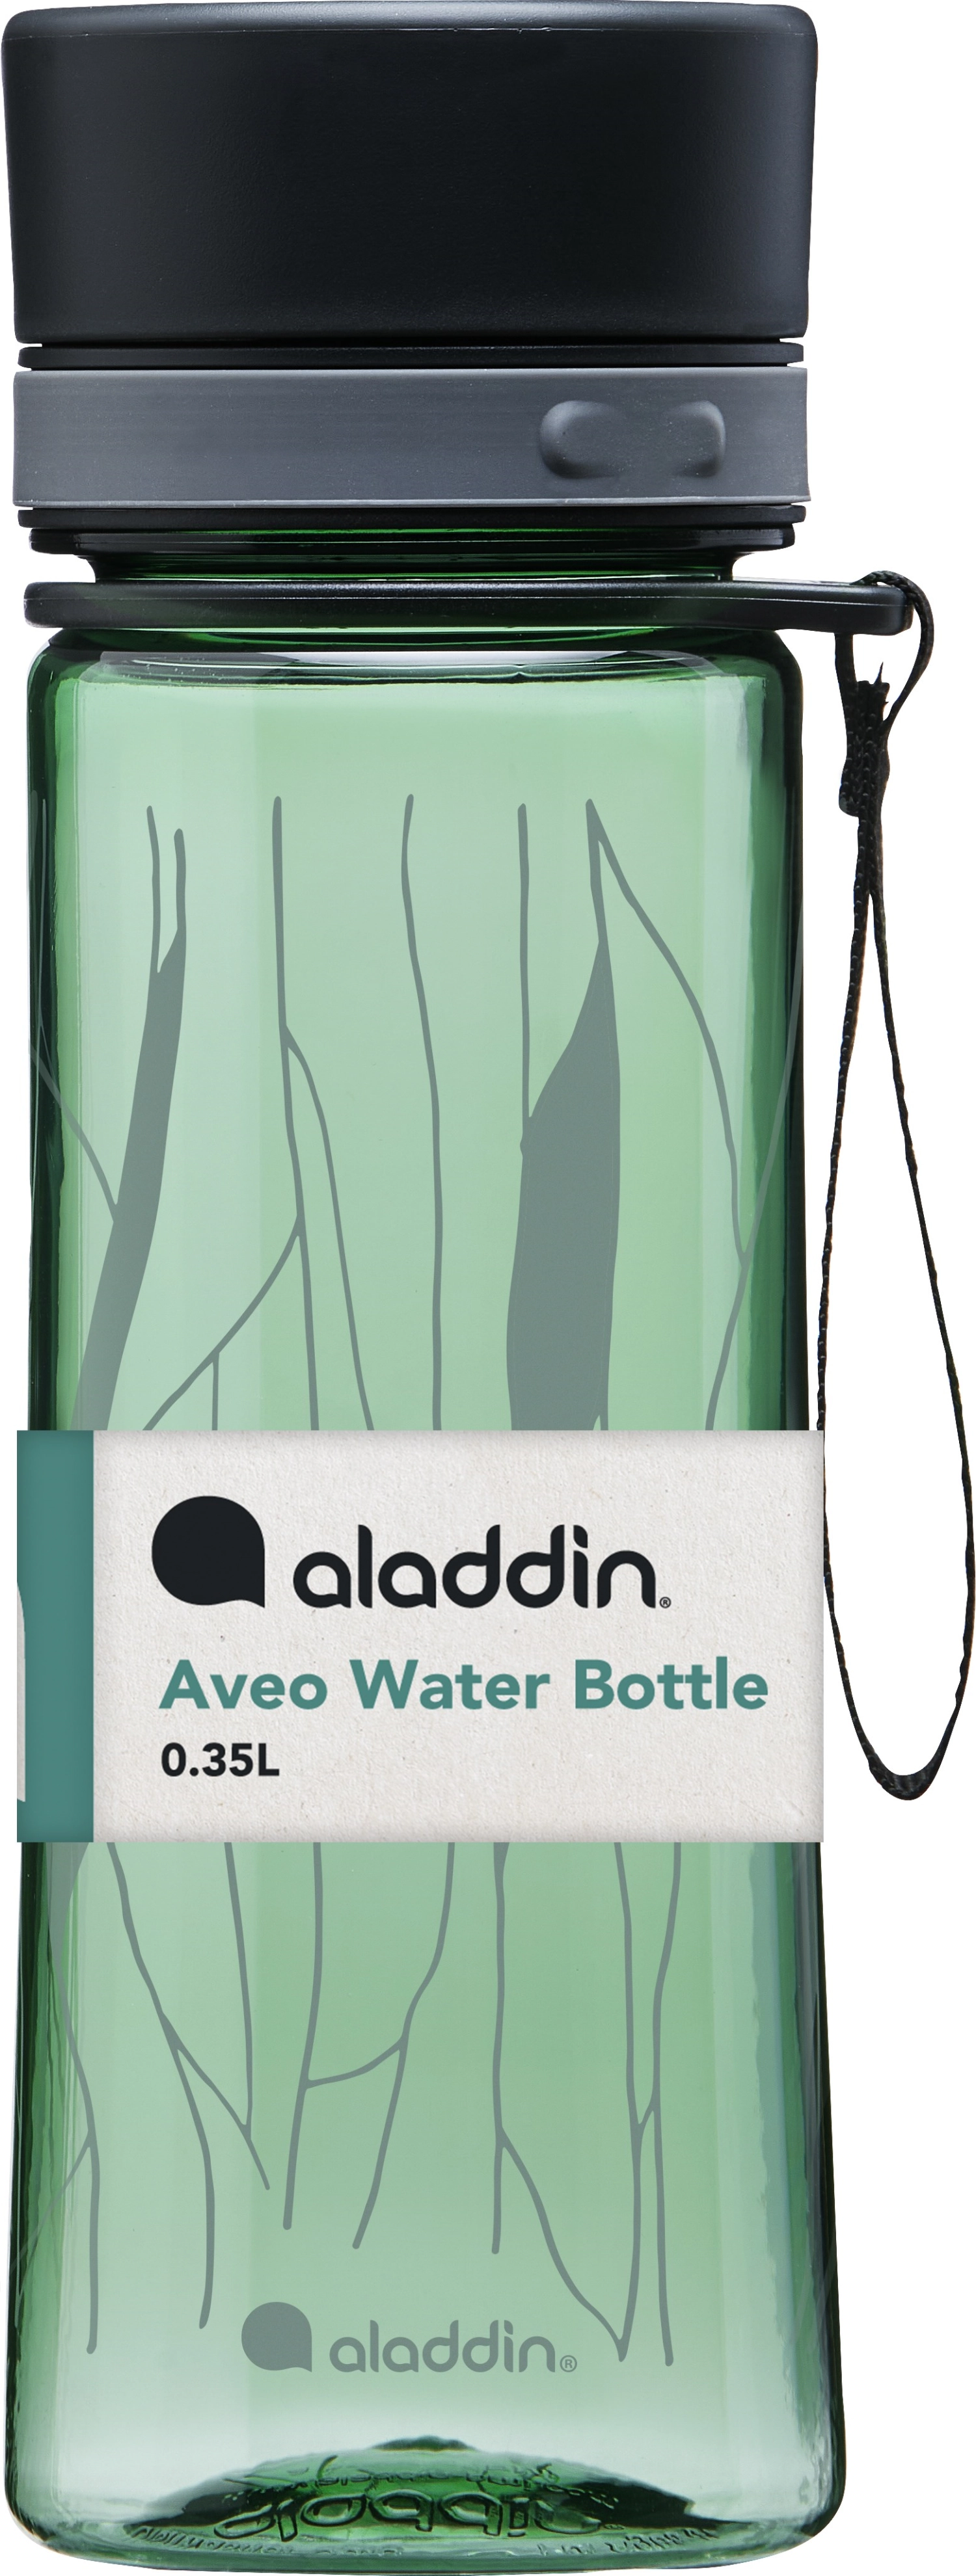 Aladdin aveo water bottle 0.35l basil green leaf print